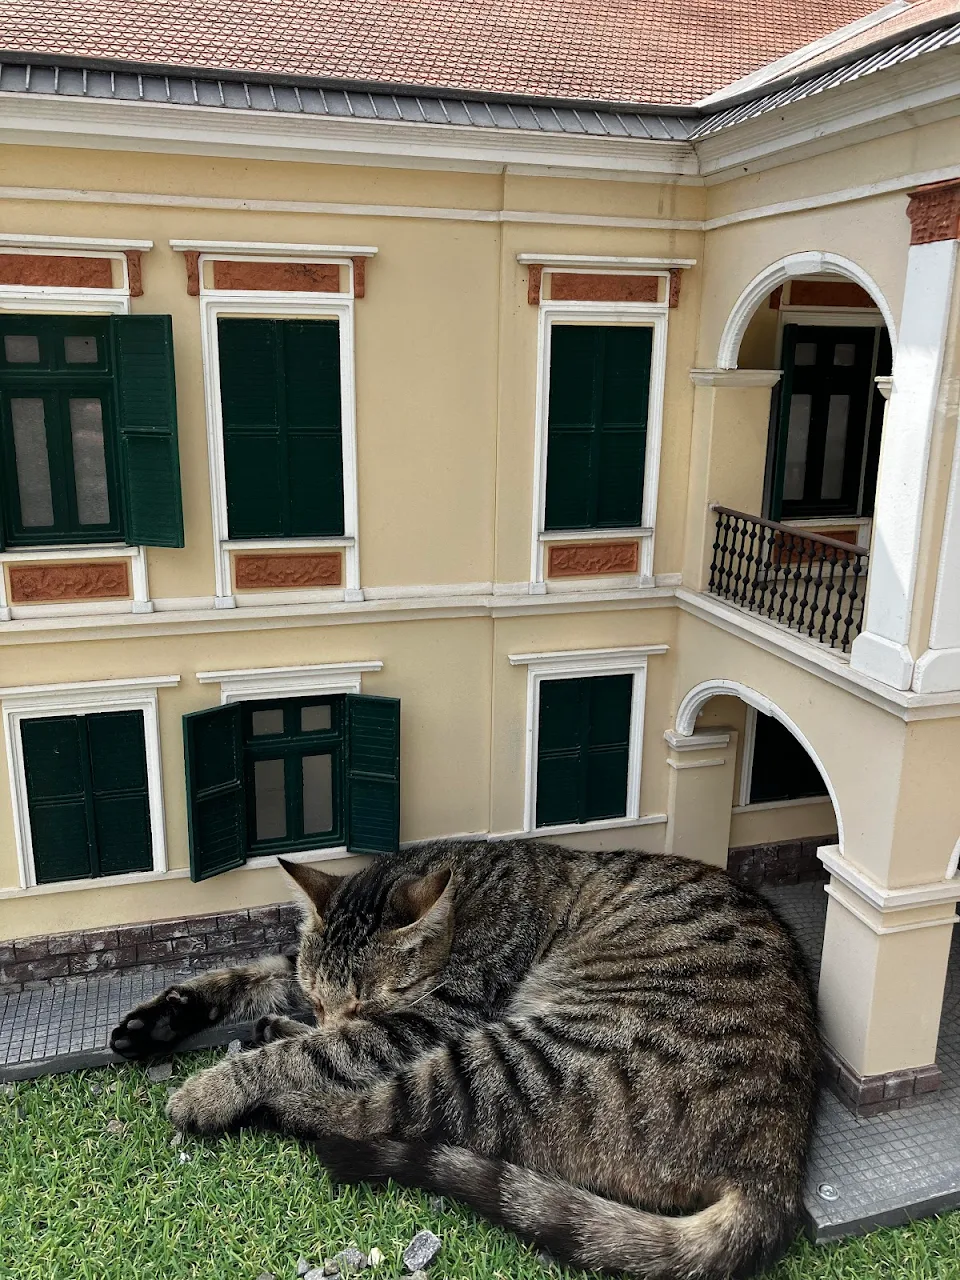 Stray kitten fell asleep near a miniature model of a house